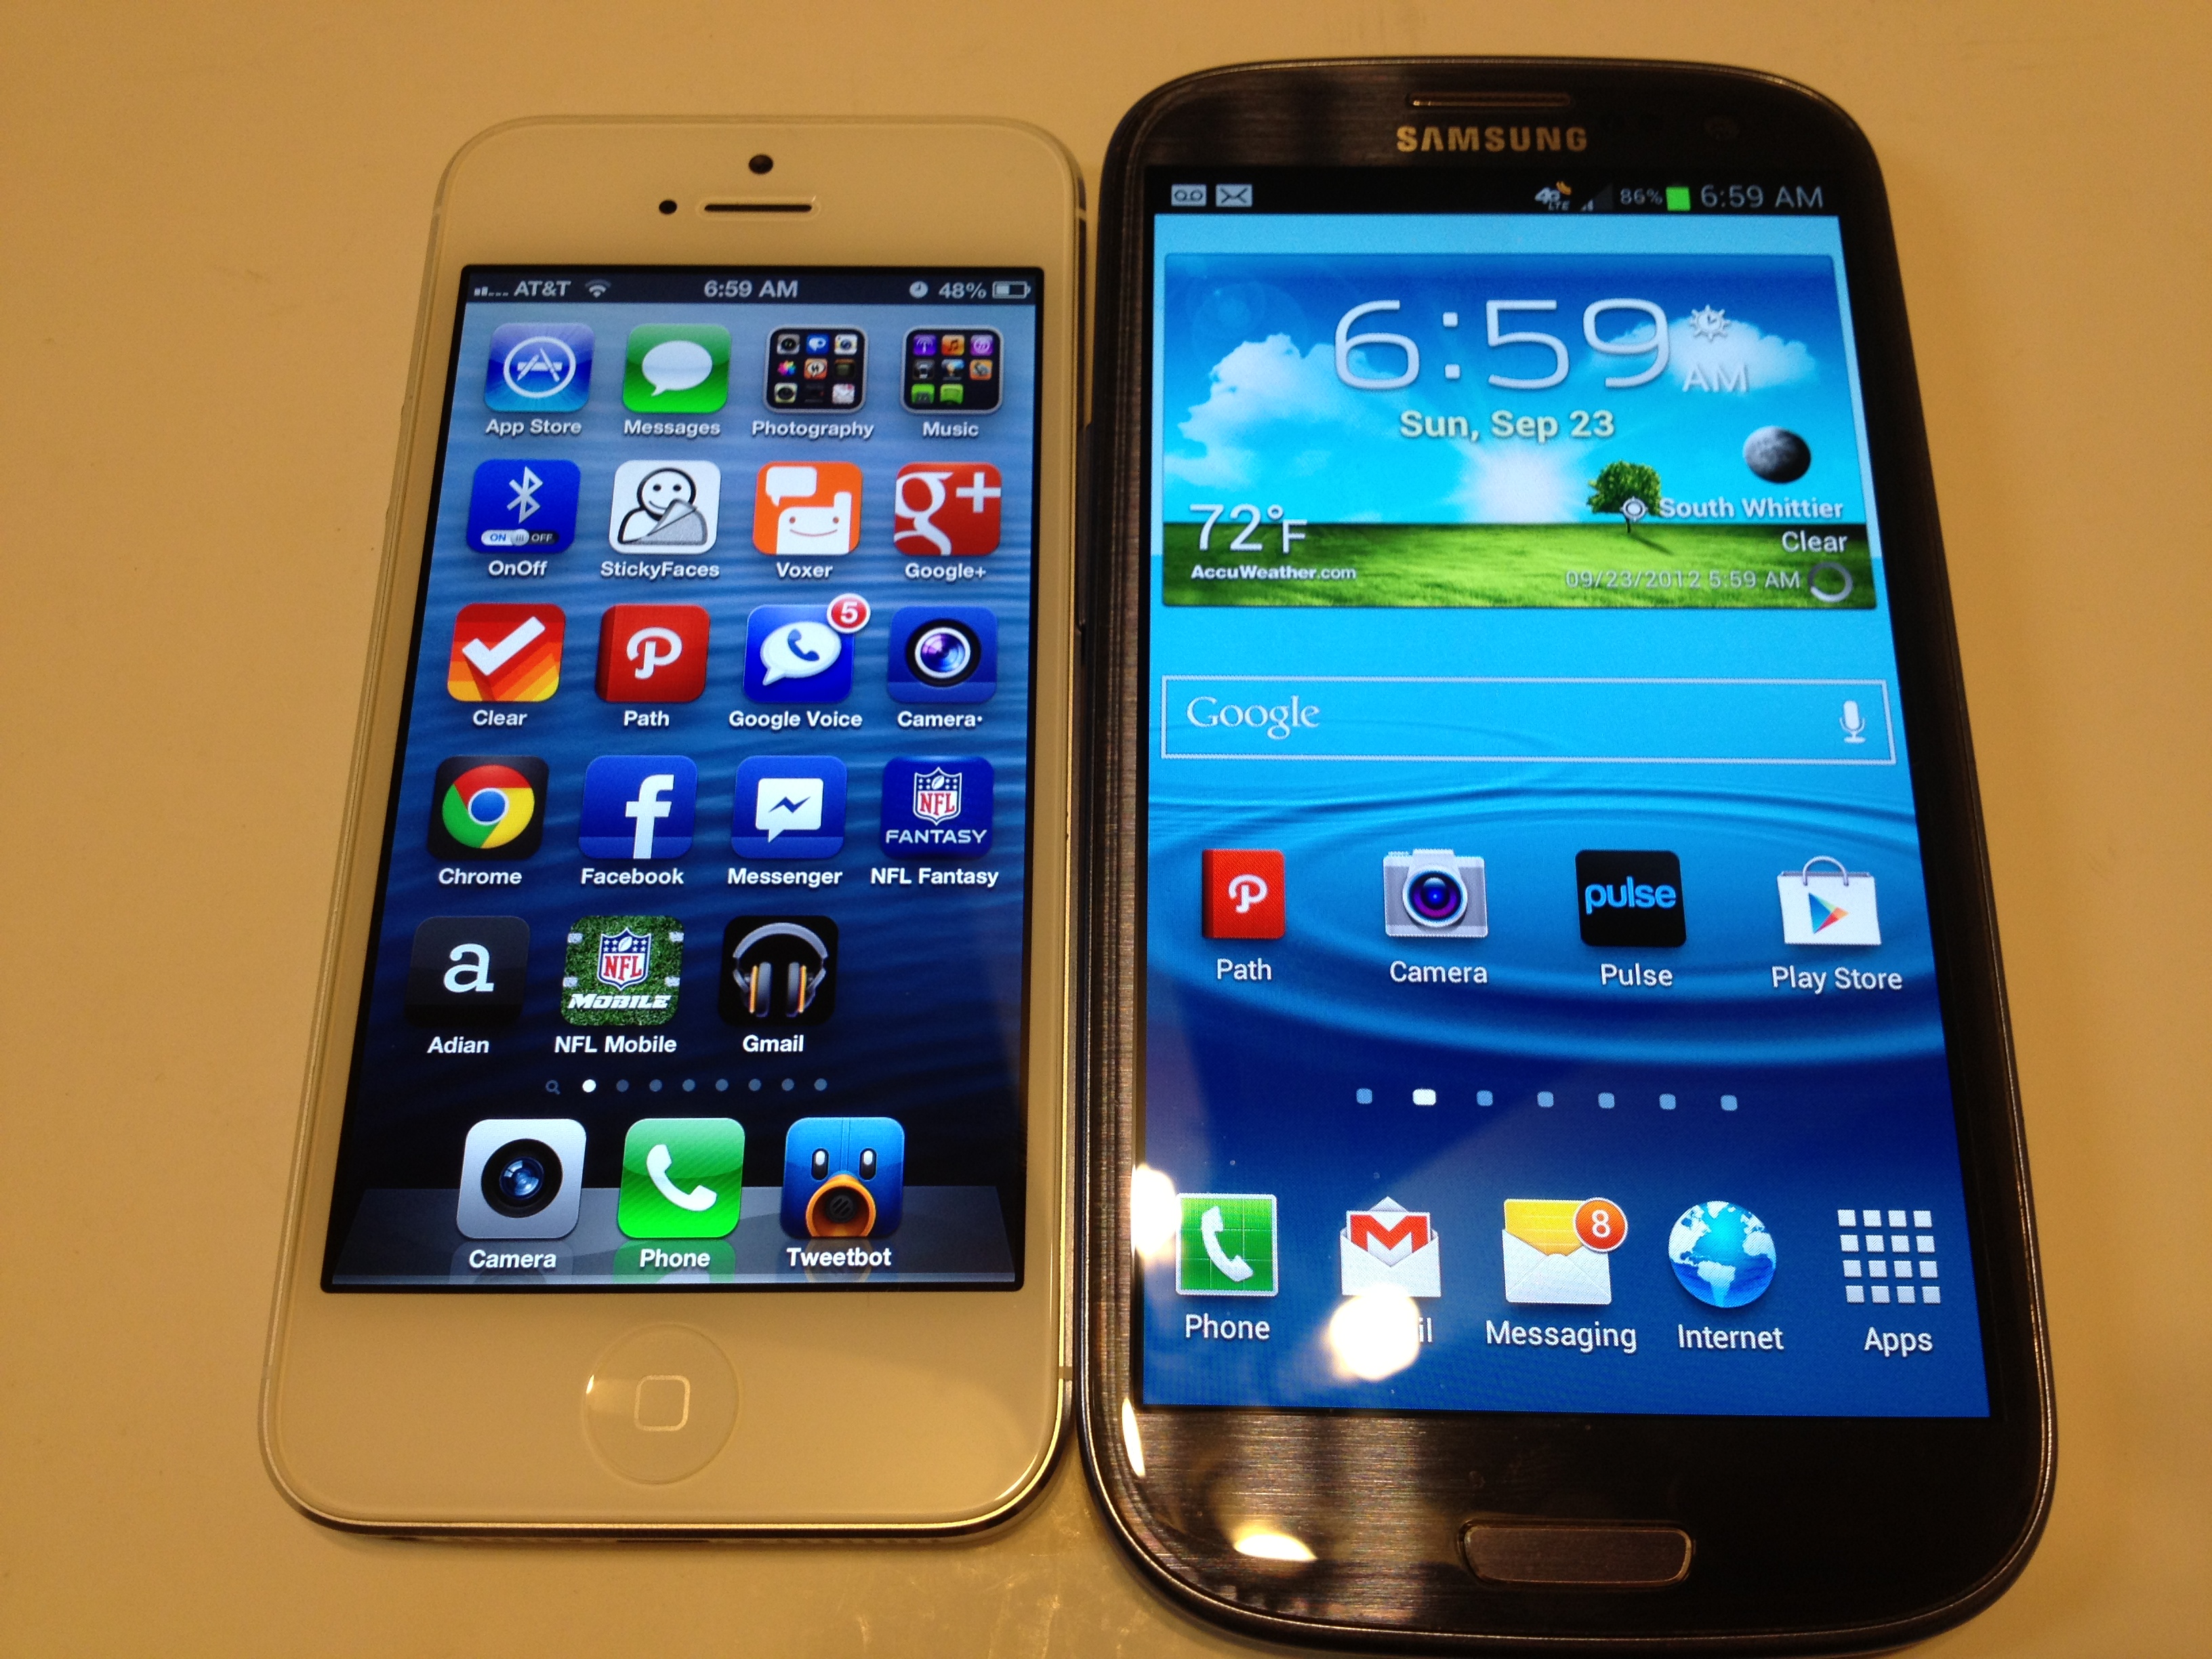 Iphone 5 vs Samsung Galaxy s3